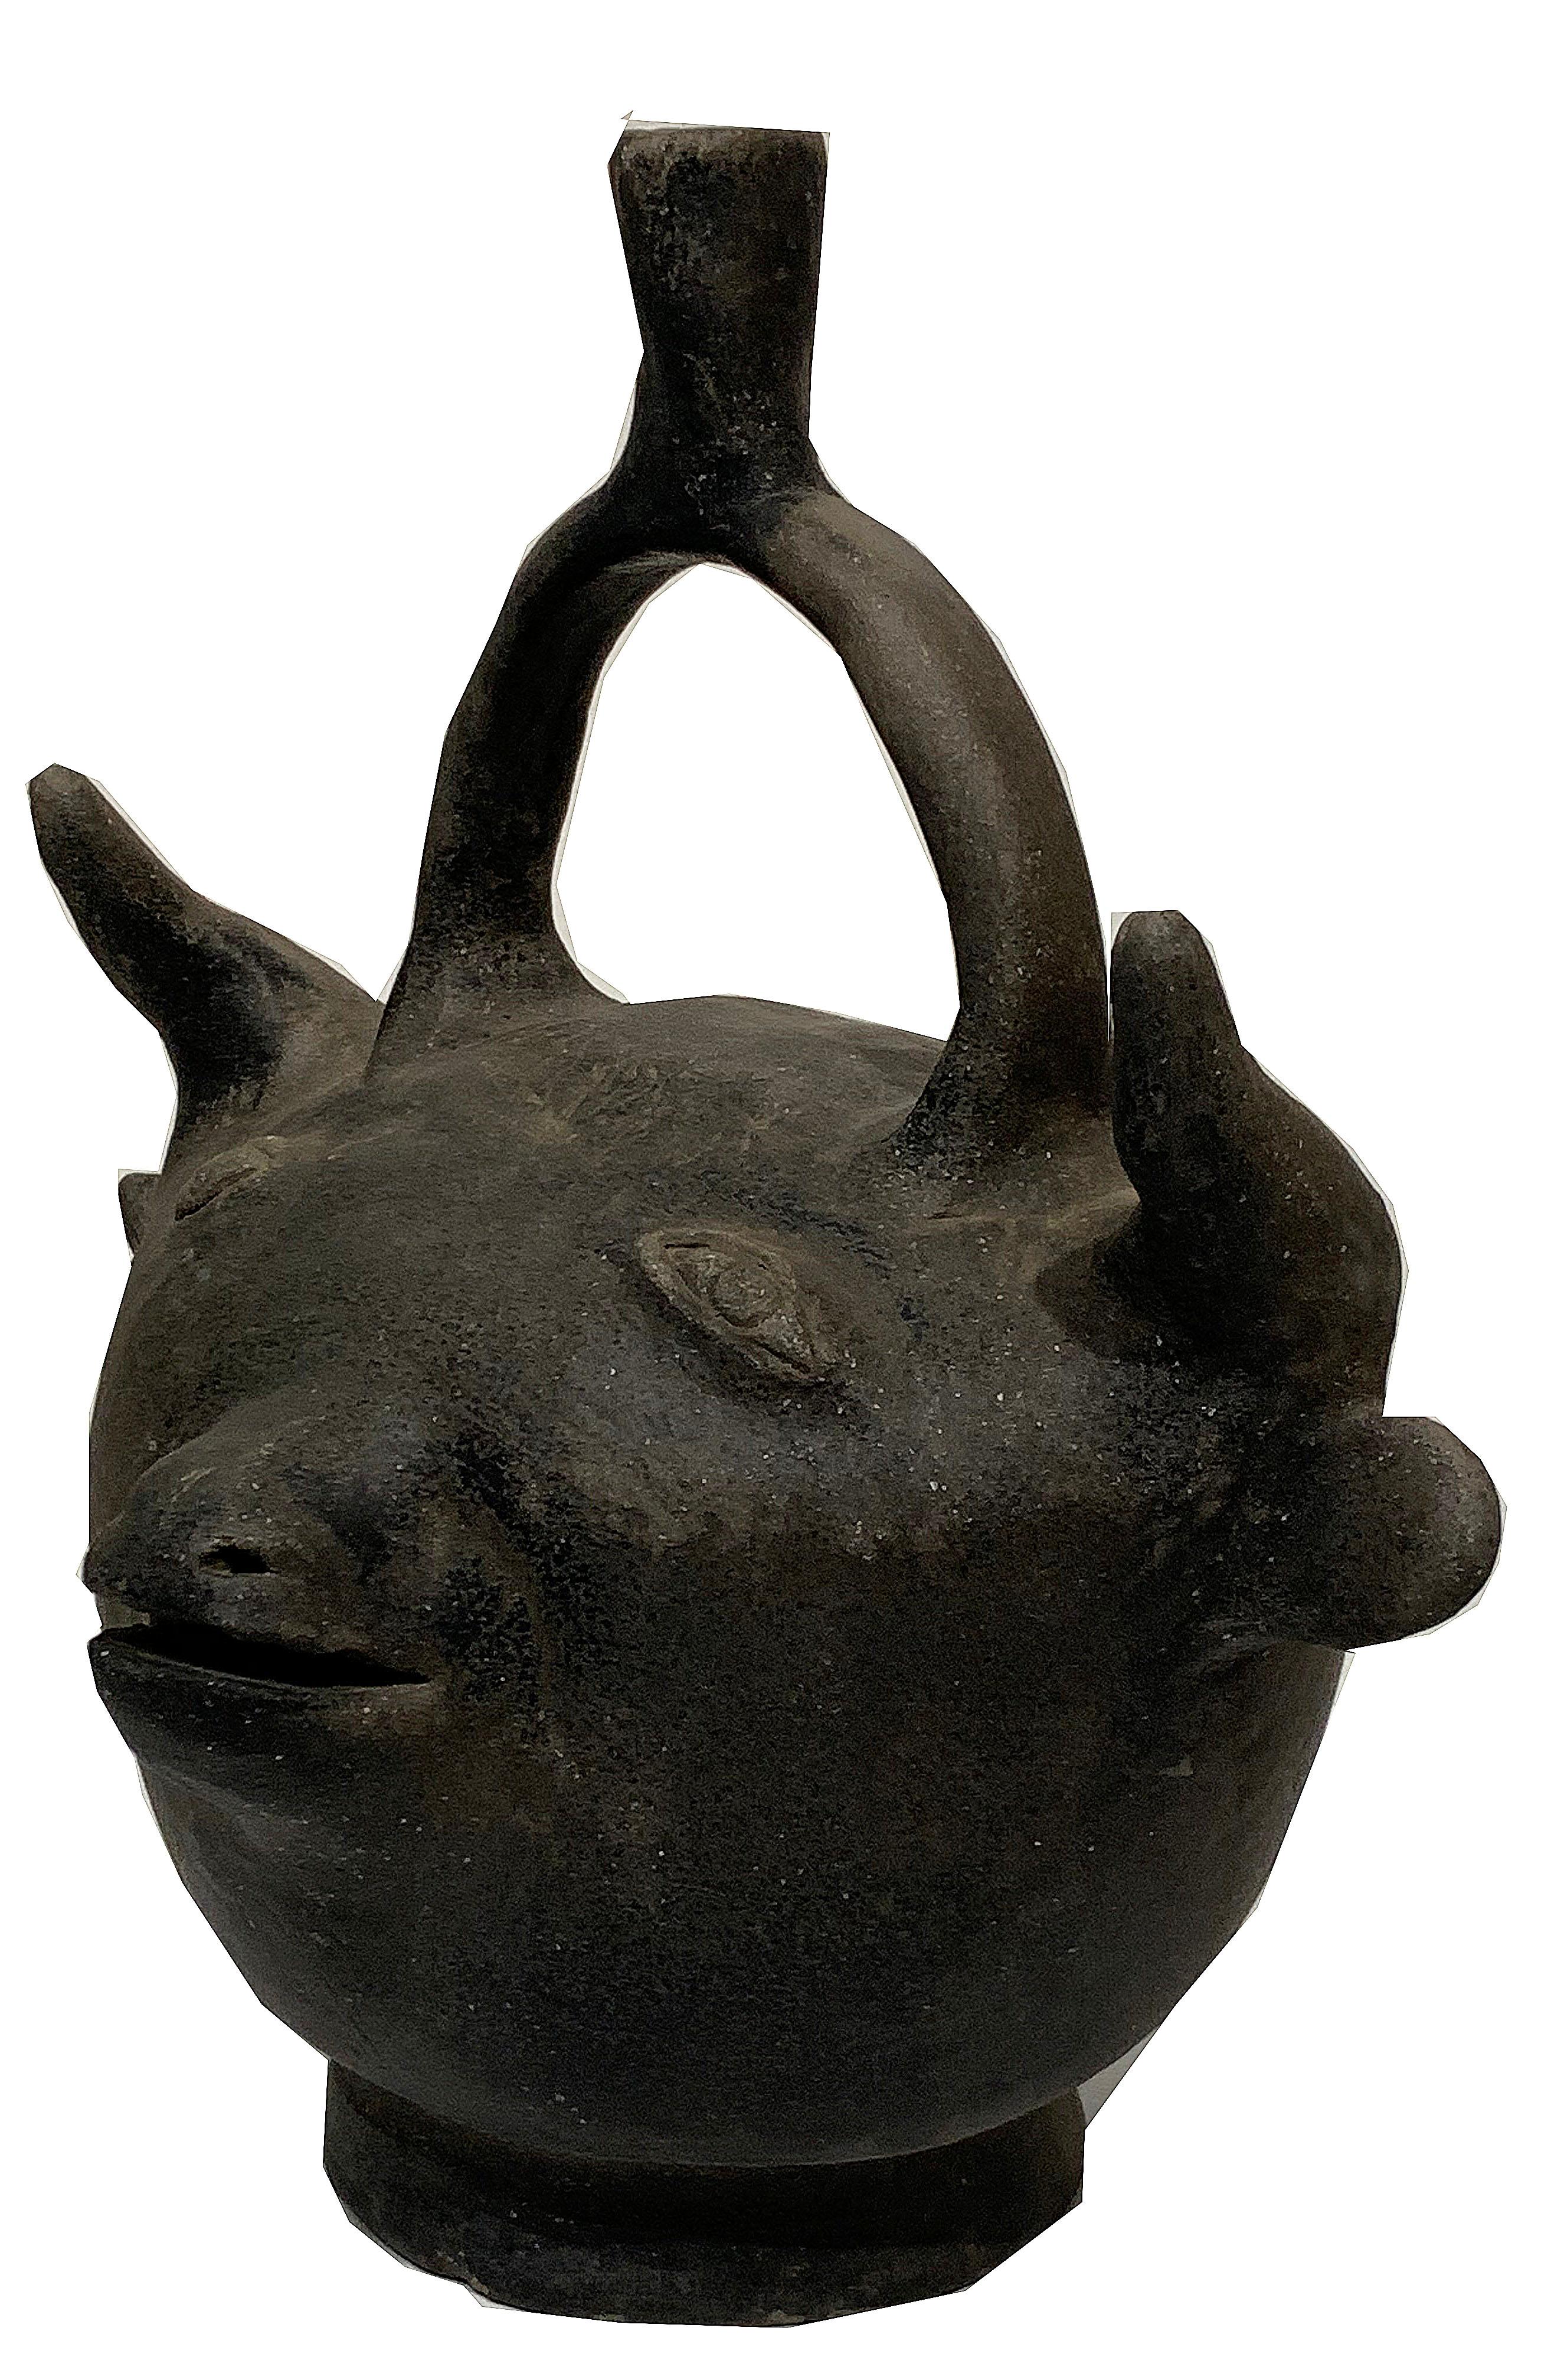 North American Double Face Bull and Devil Ceramic Sculpture, Piggy Bank